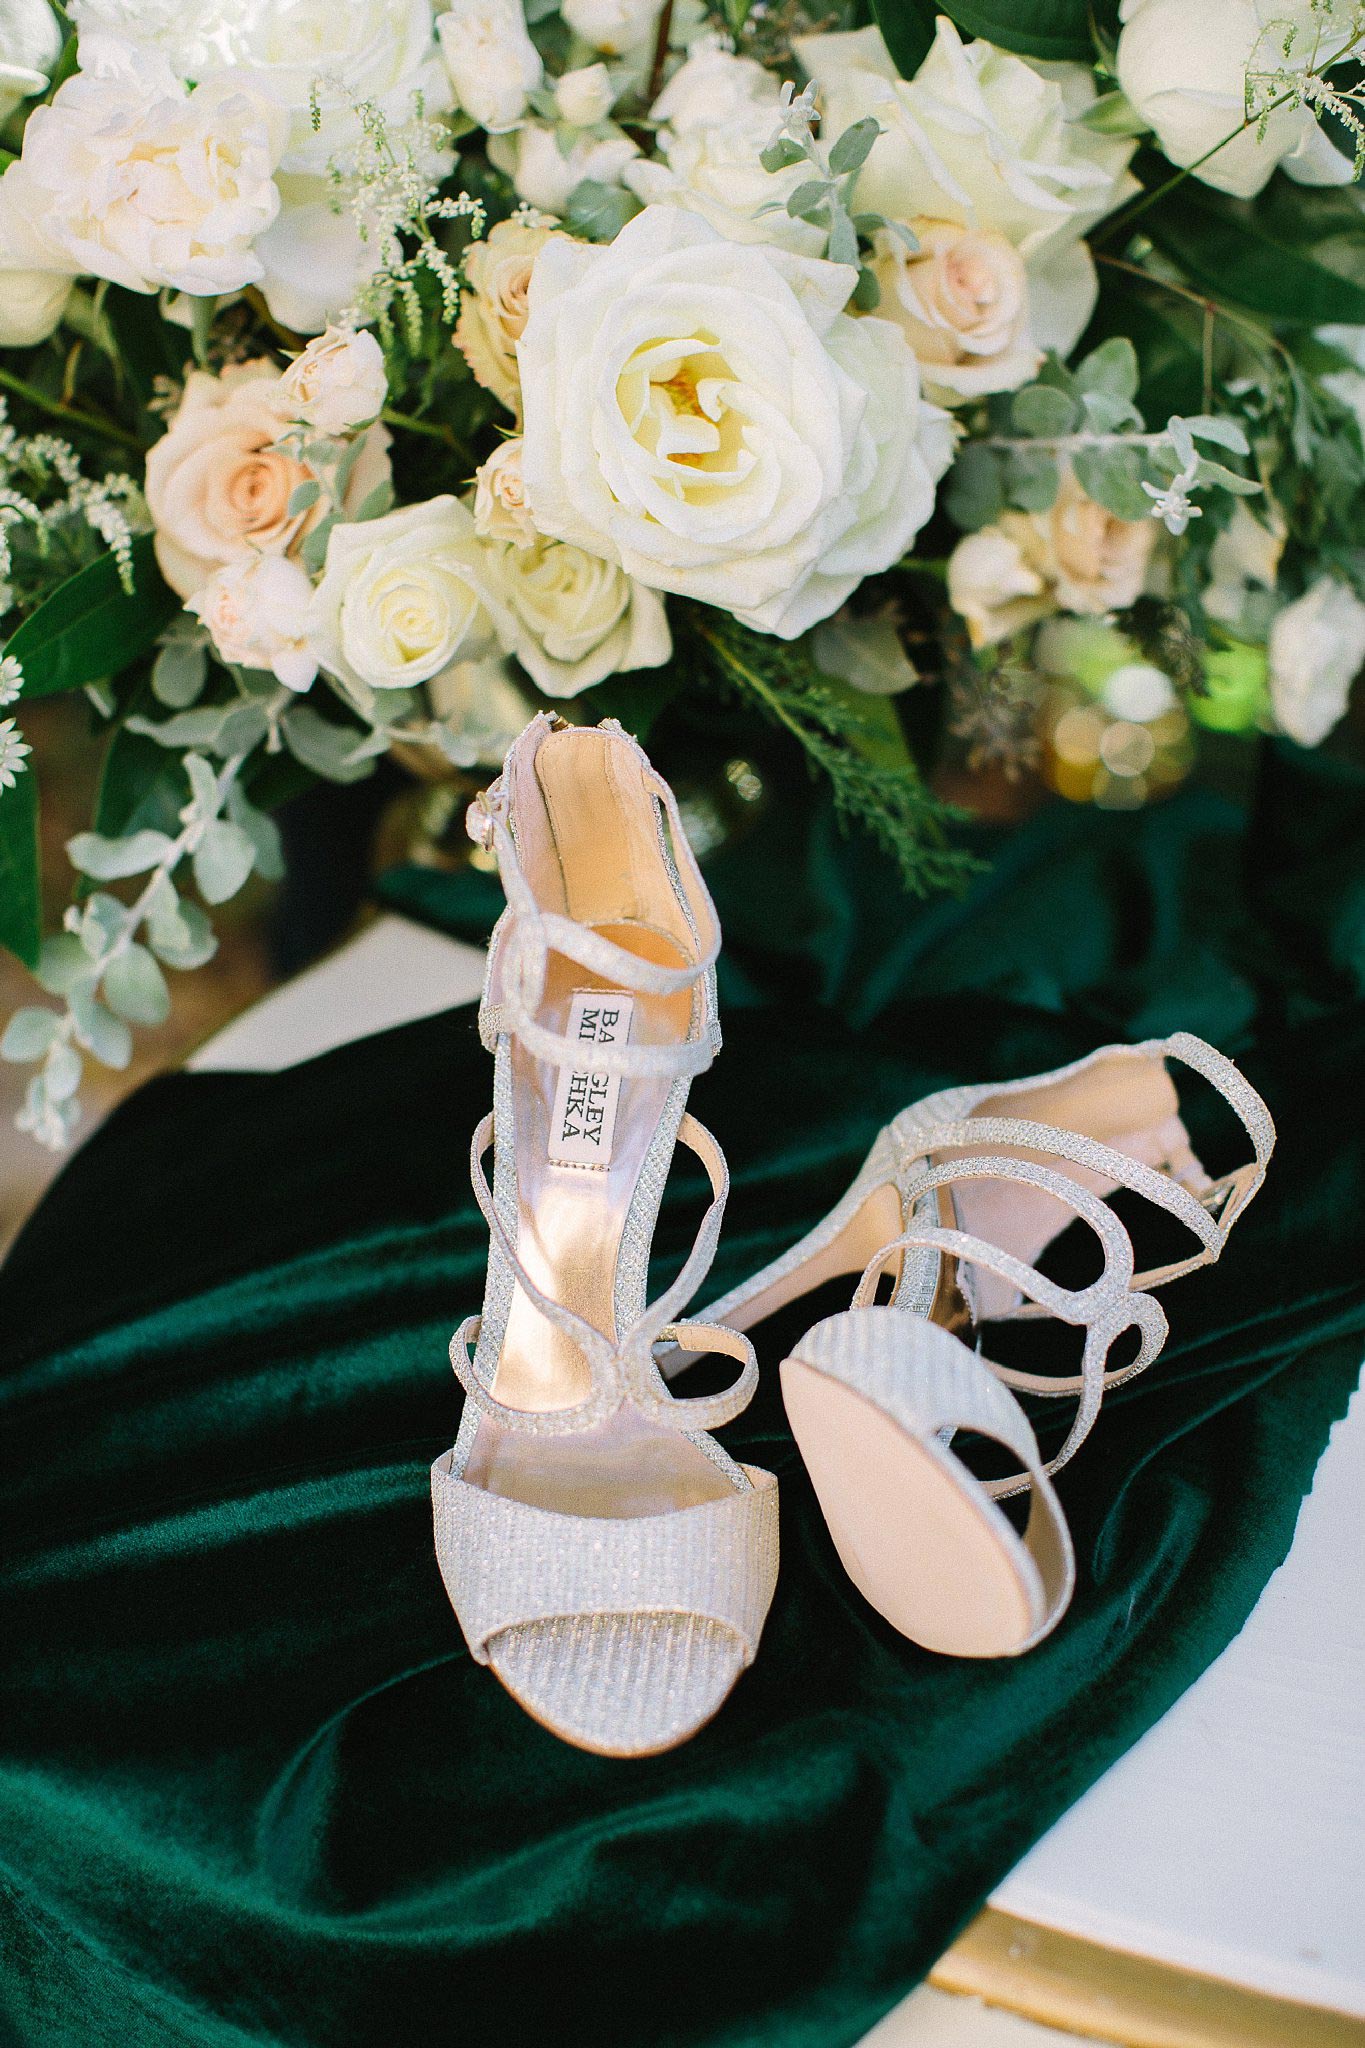 aristide mansfield wedding shoes on velvet green fabric